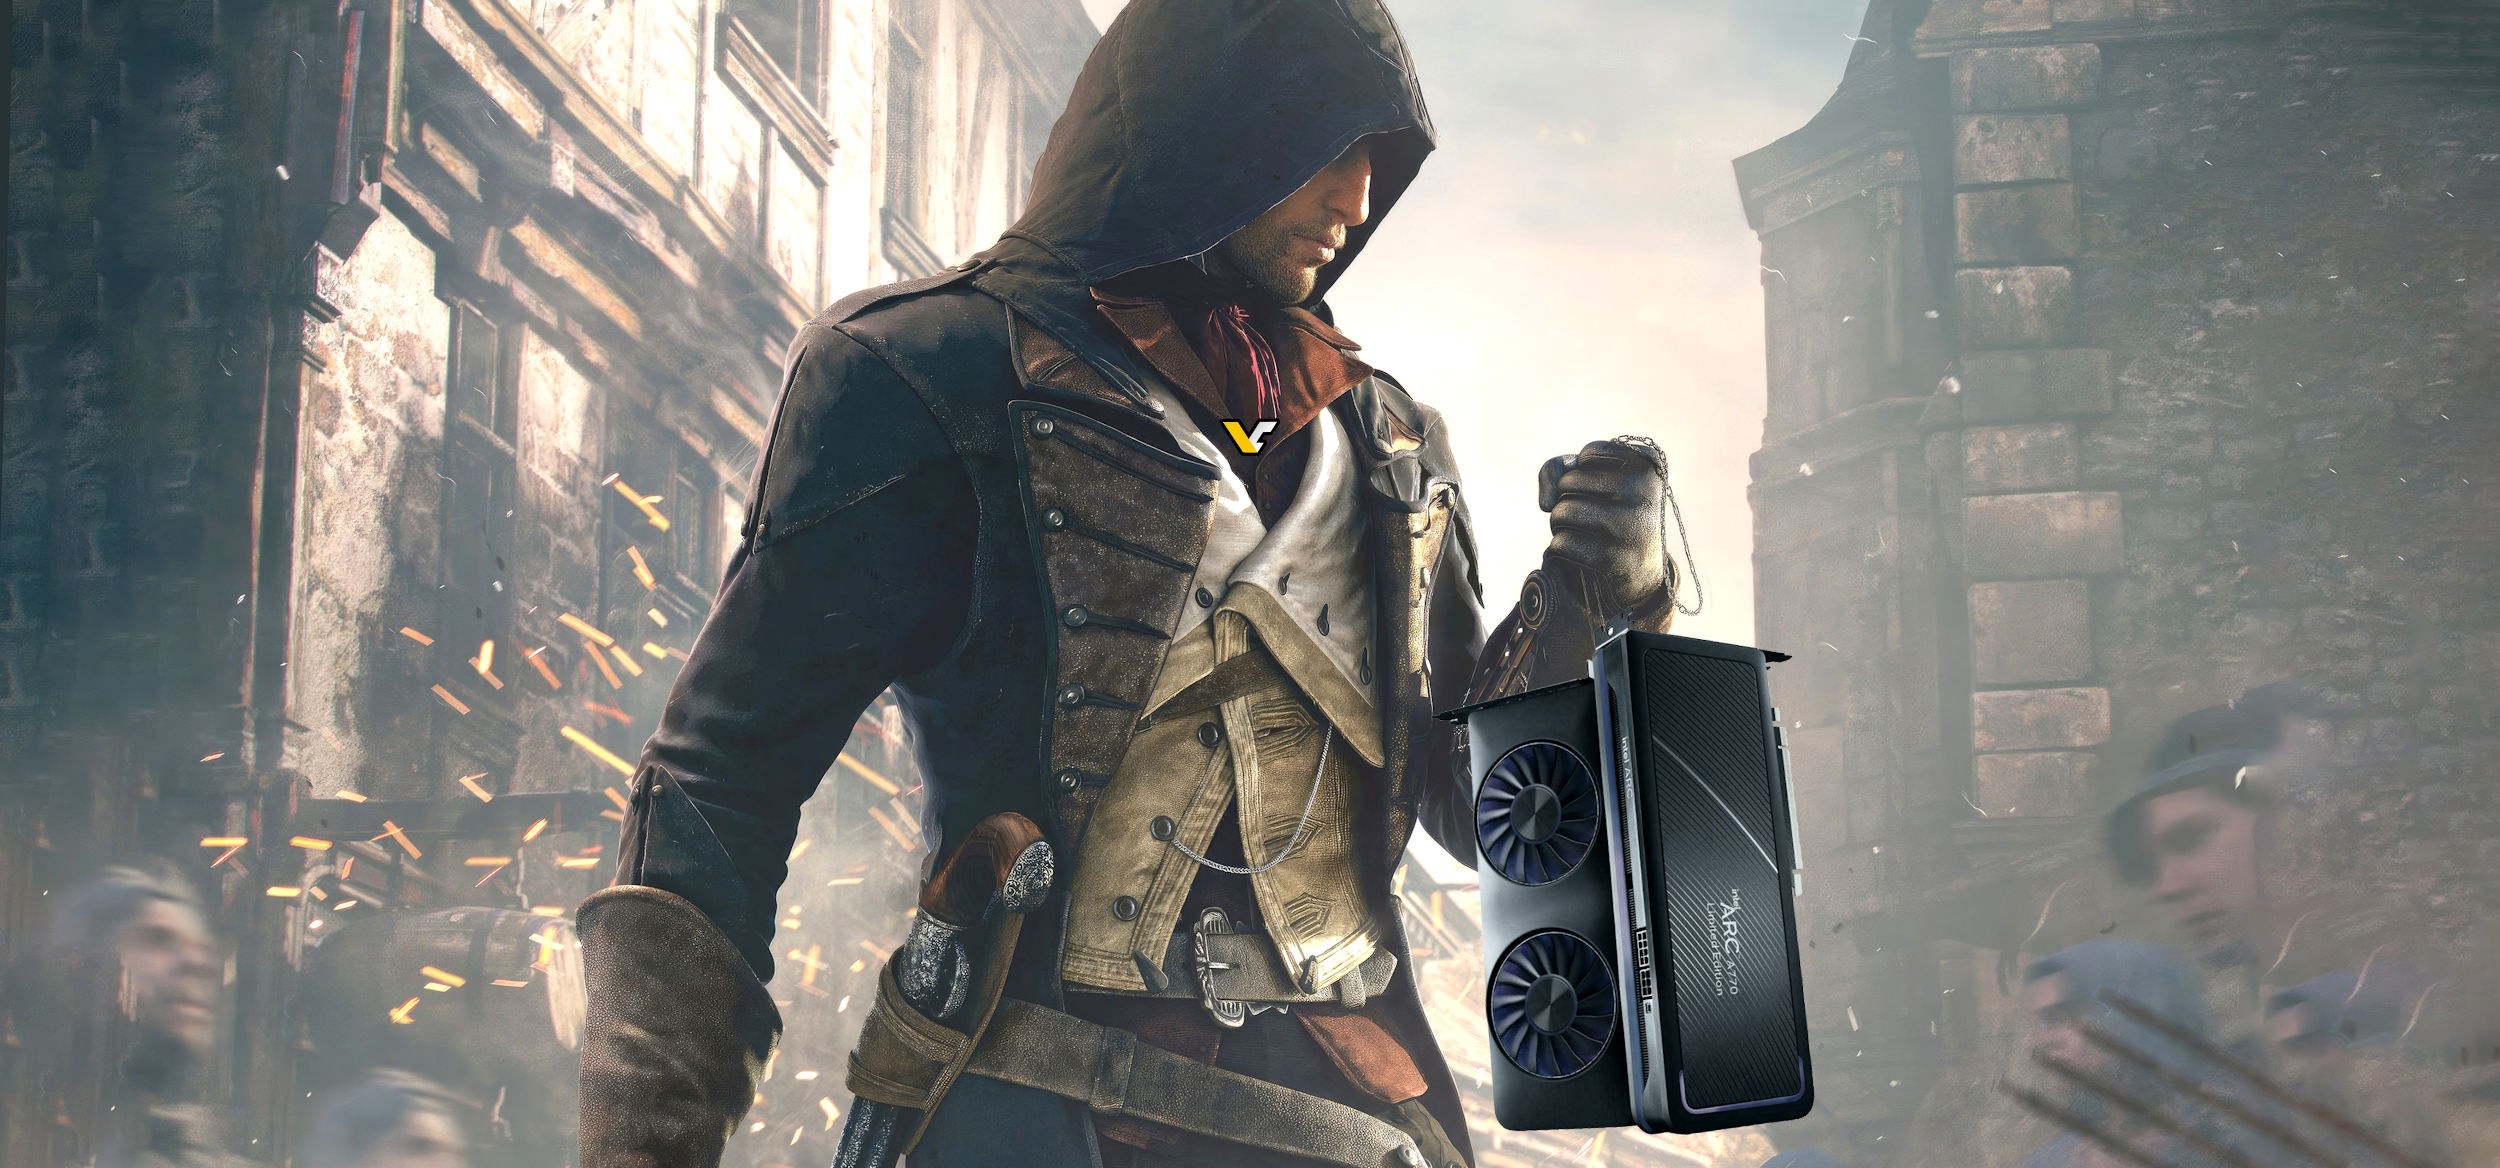 Assassin's Creed Unity Uses Plenty of Nvidia Technologies on PC – Video